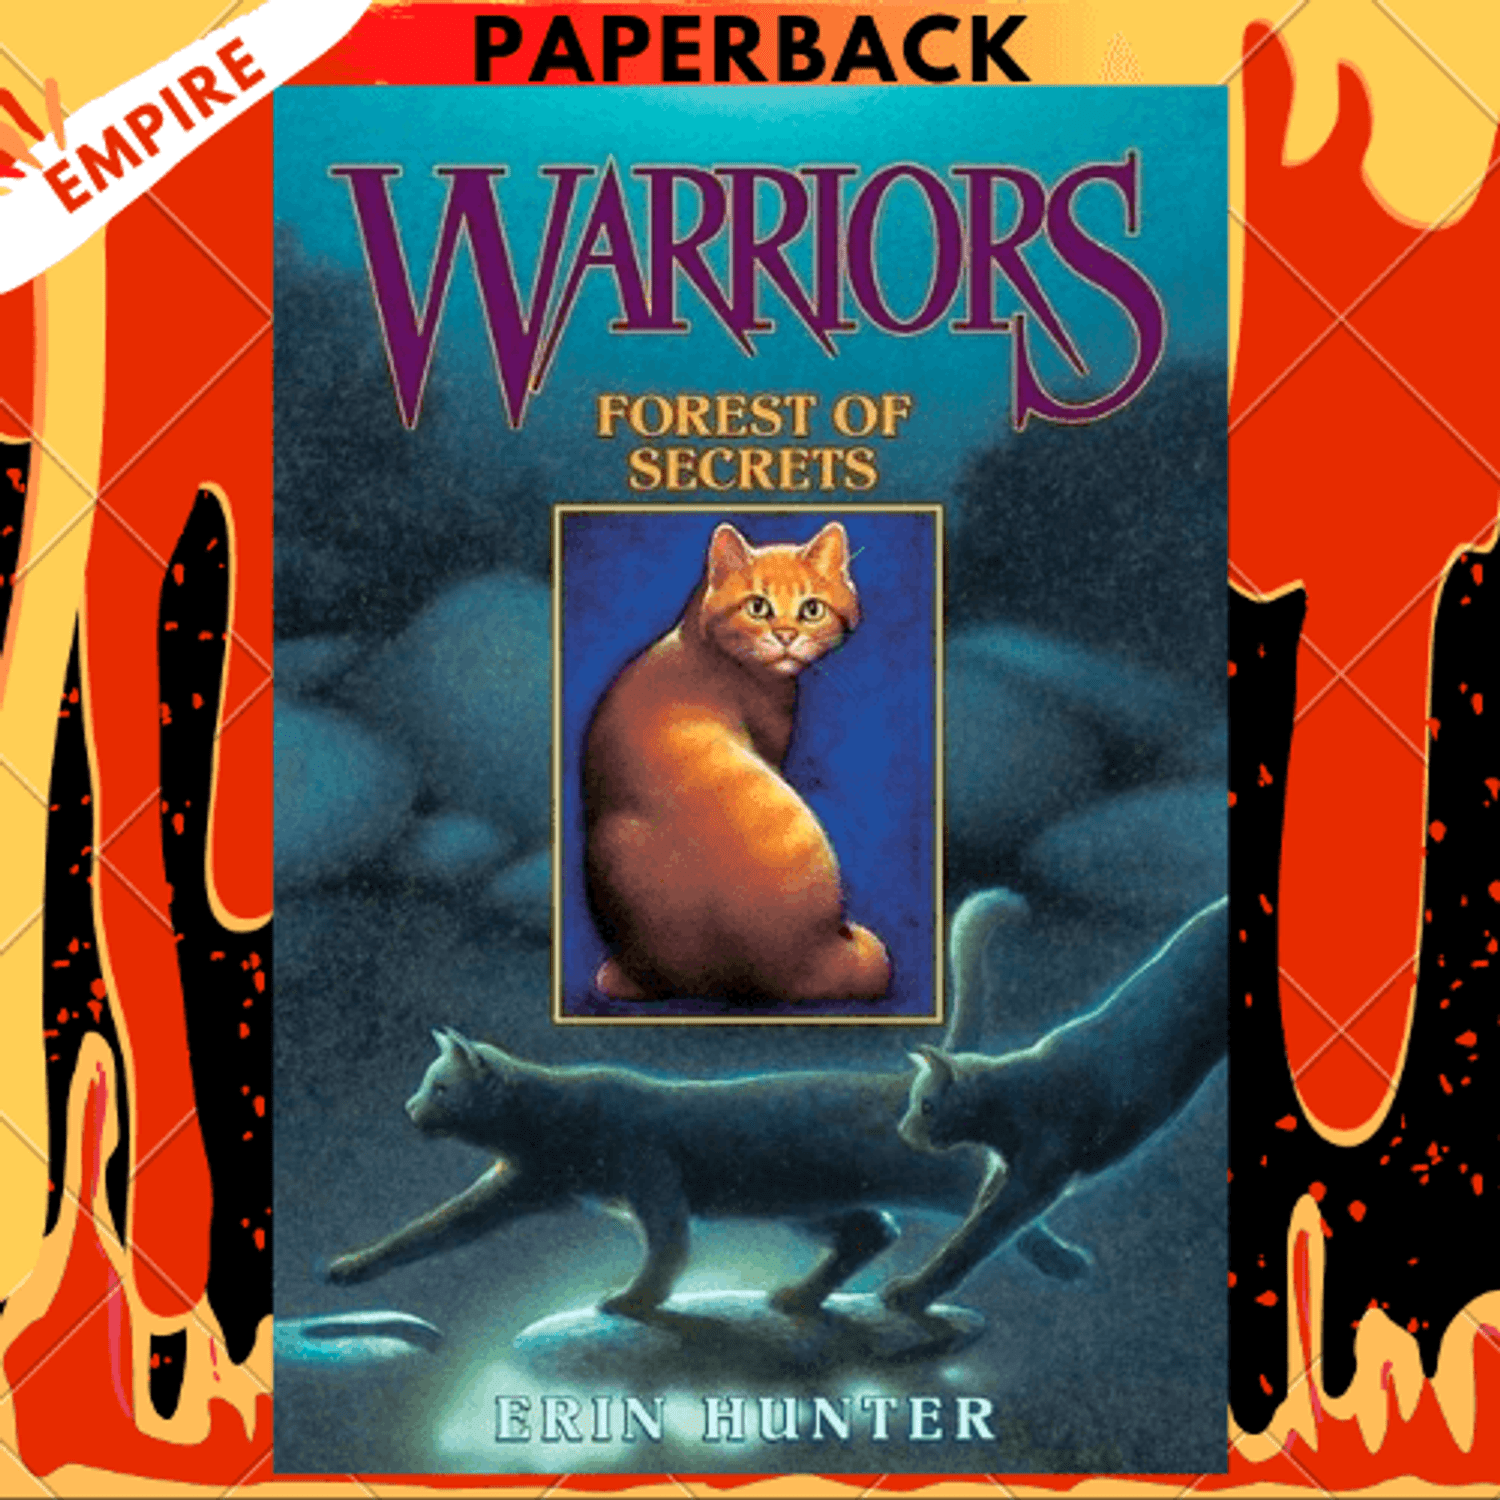 Forest of Secrets (Warriors, #3) by Erin Hunter